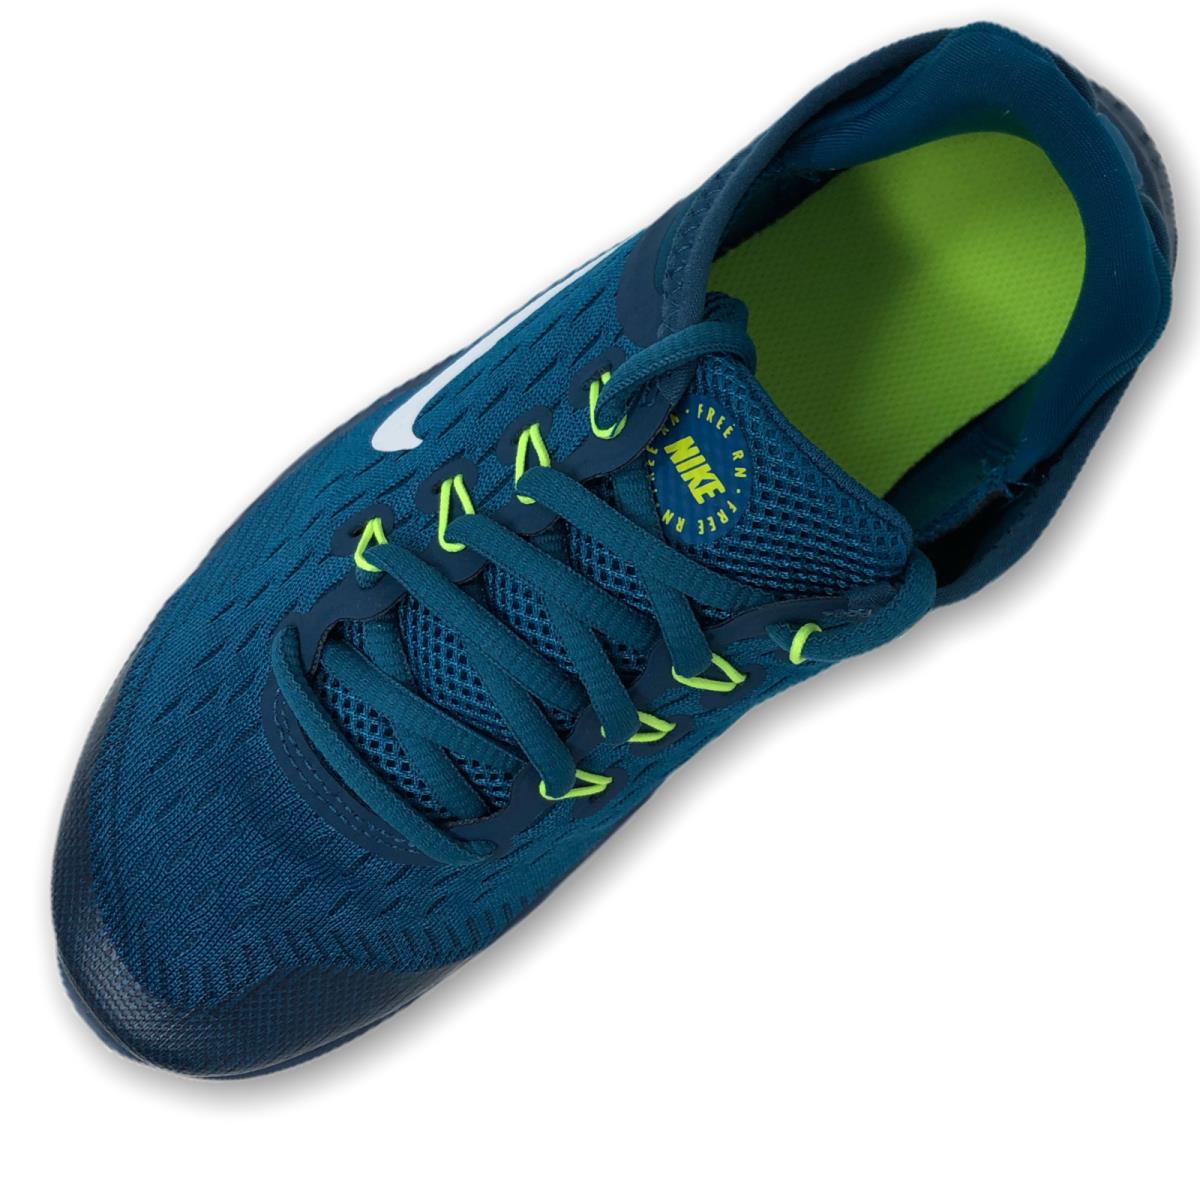 Nike shoes  - Blue 3